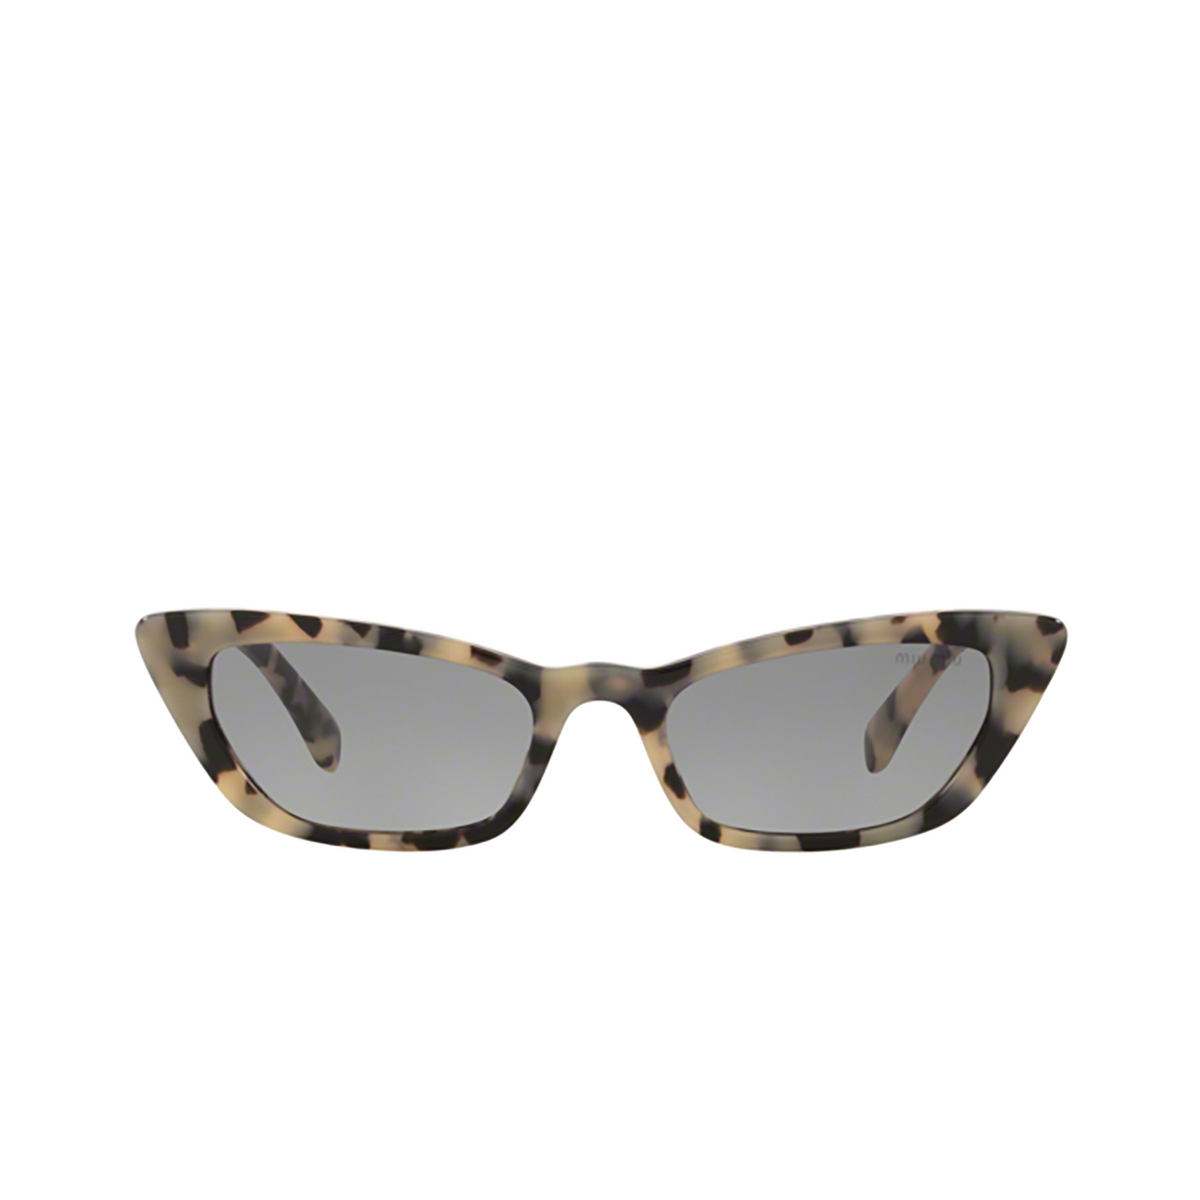 Miu Miu® Cat-eye Sunglasses: MU 10US color Sand Havana Brown KAD3M1 - front view.